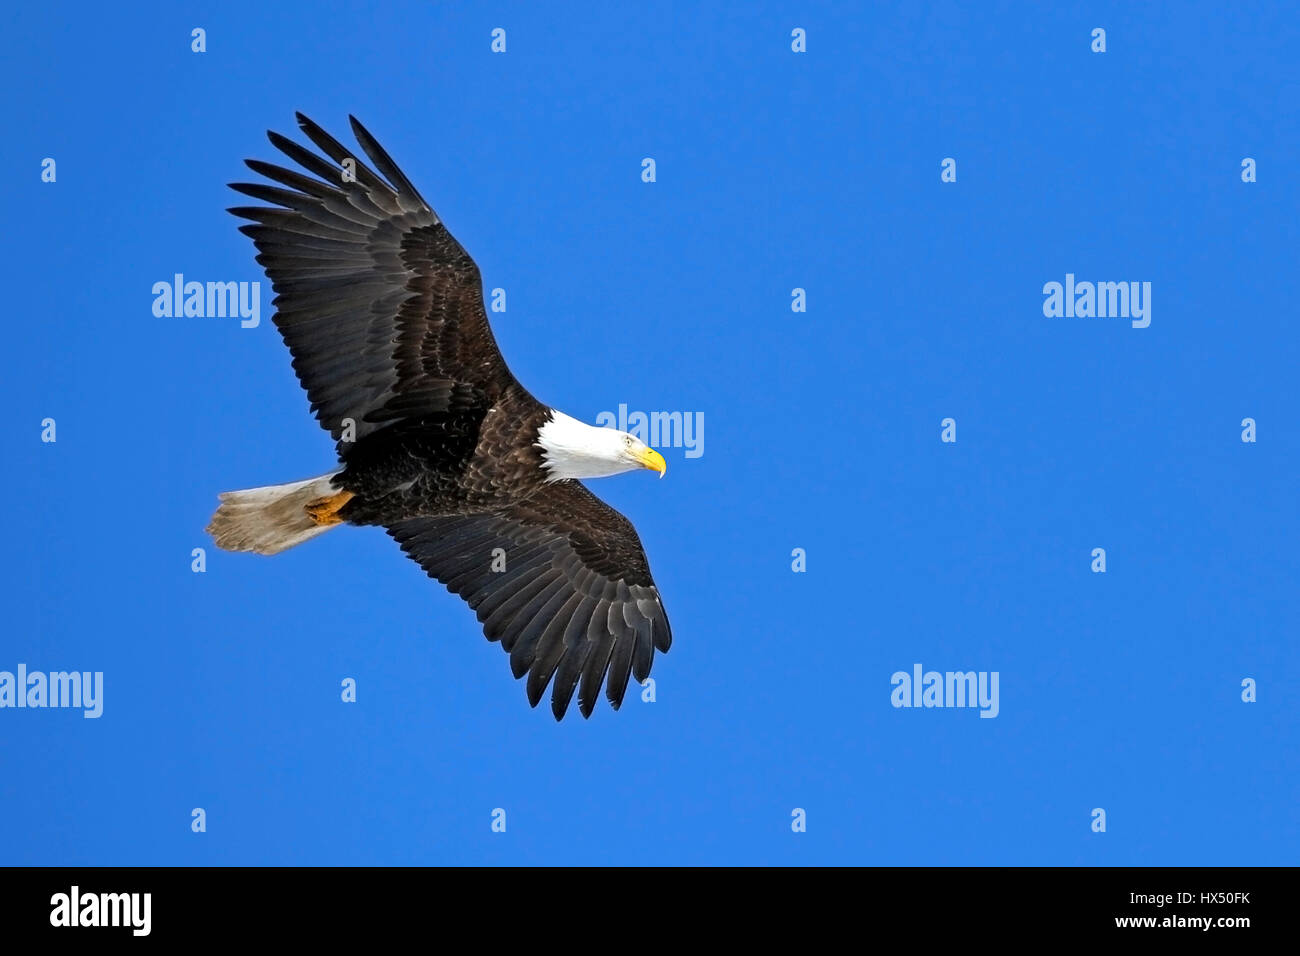 Bald Eagle in flight, soaring in blue sky Stock Photo